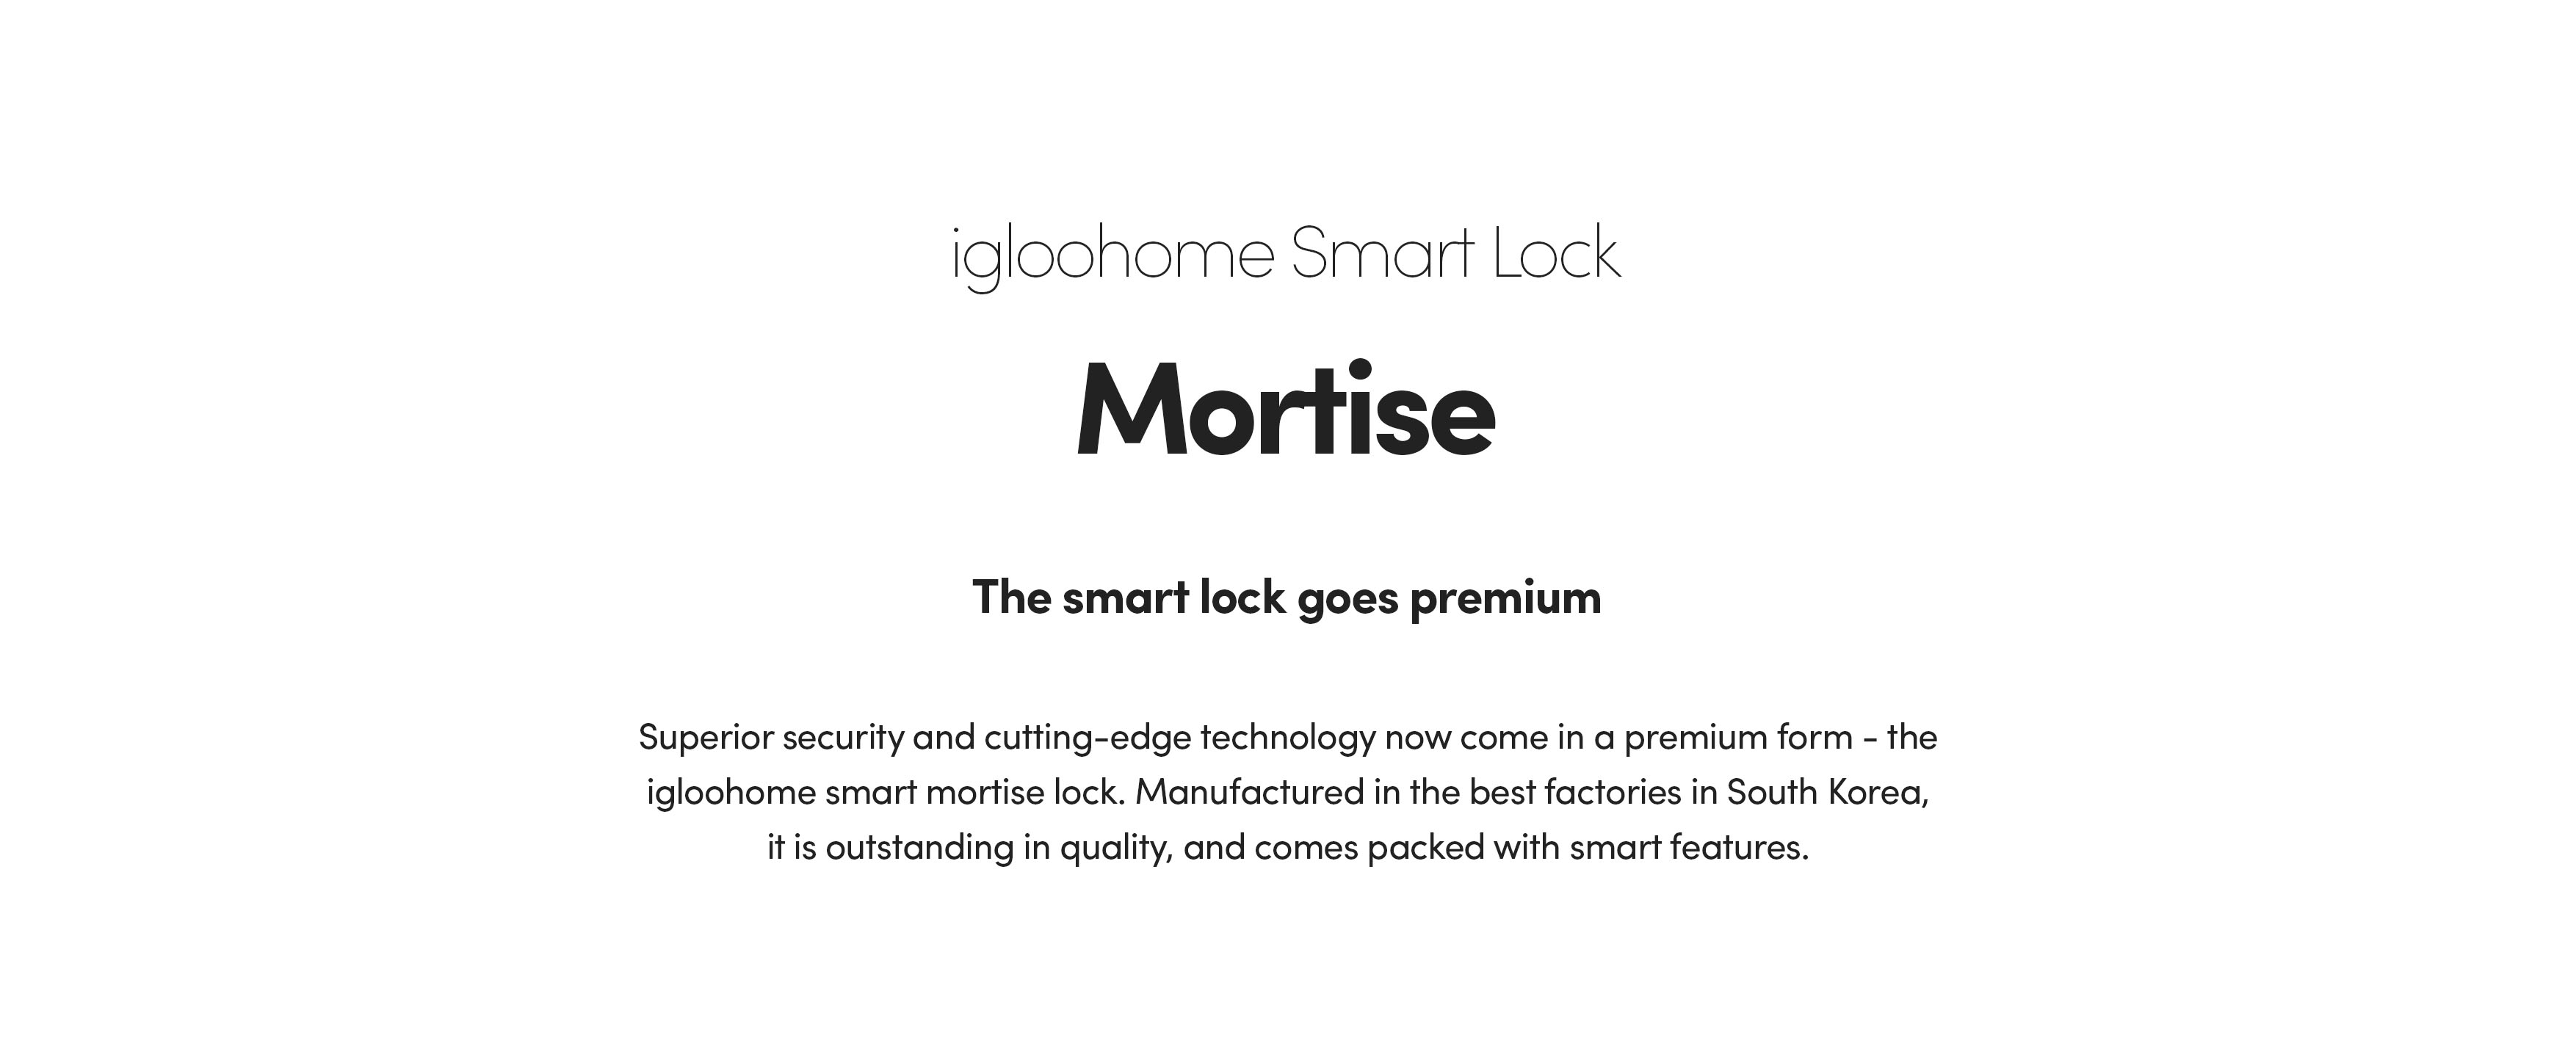 mortise smart lock igloohome